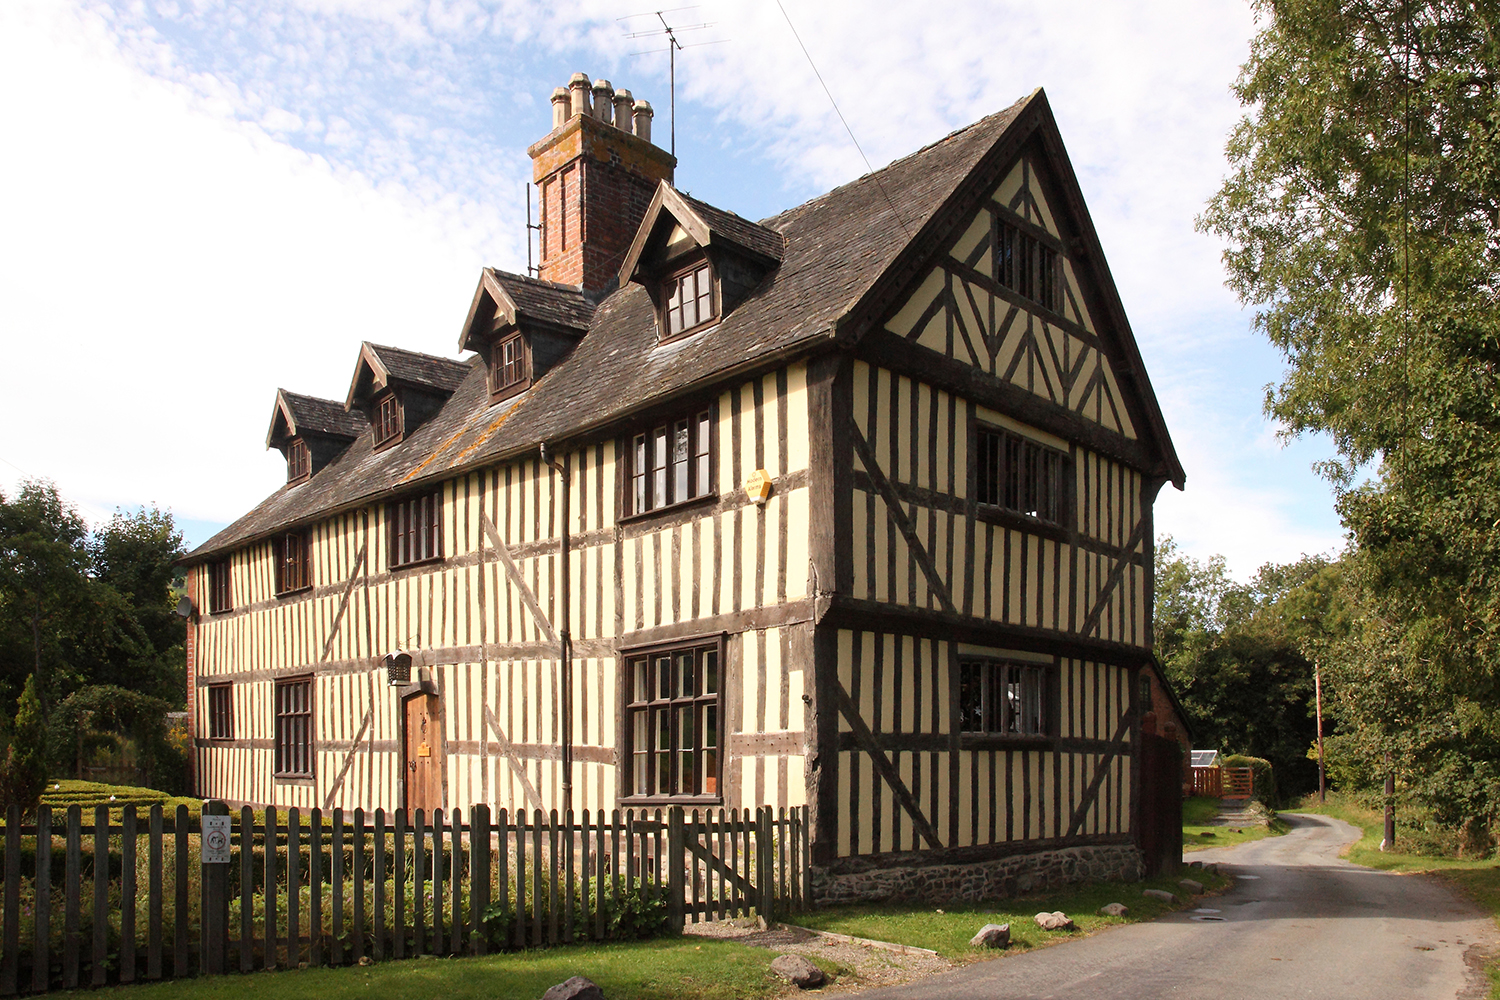 Tudor, Manor, House, Oak, Beams, Historical, letting, Rental, Holiday, agents, Air B&B.